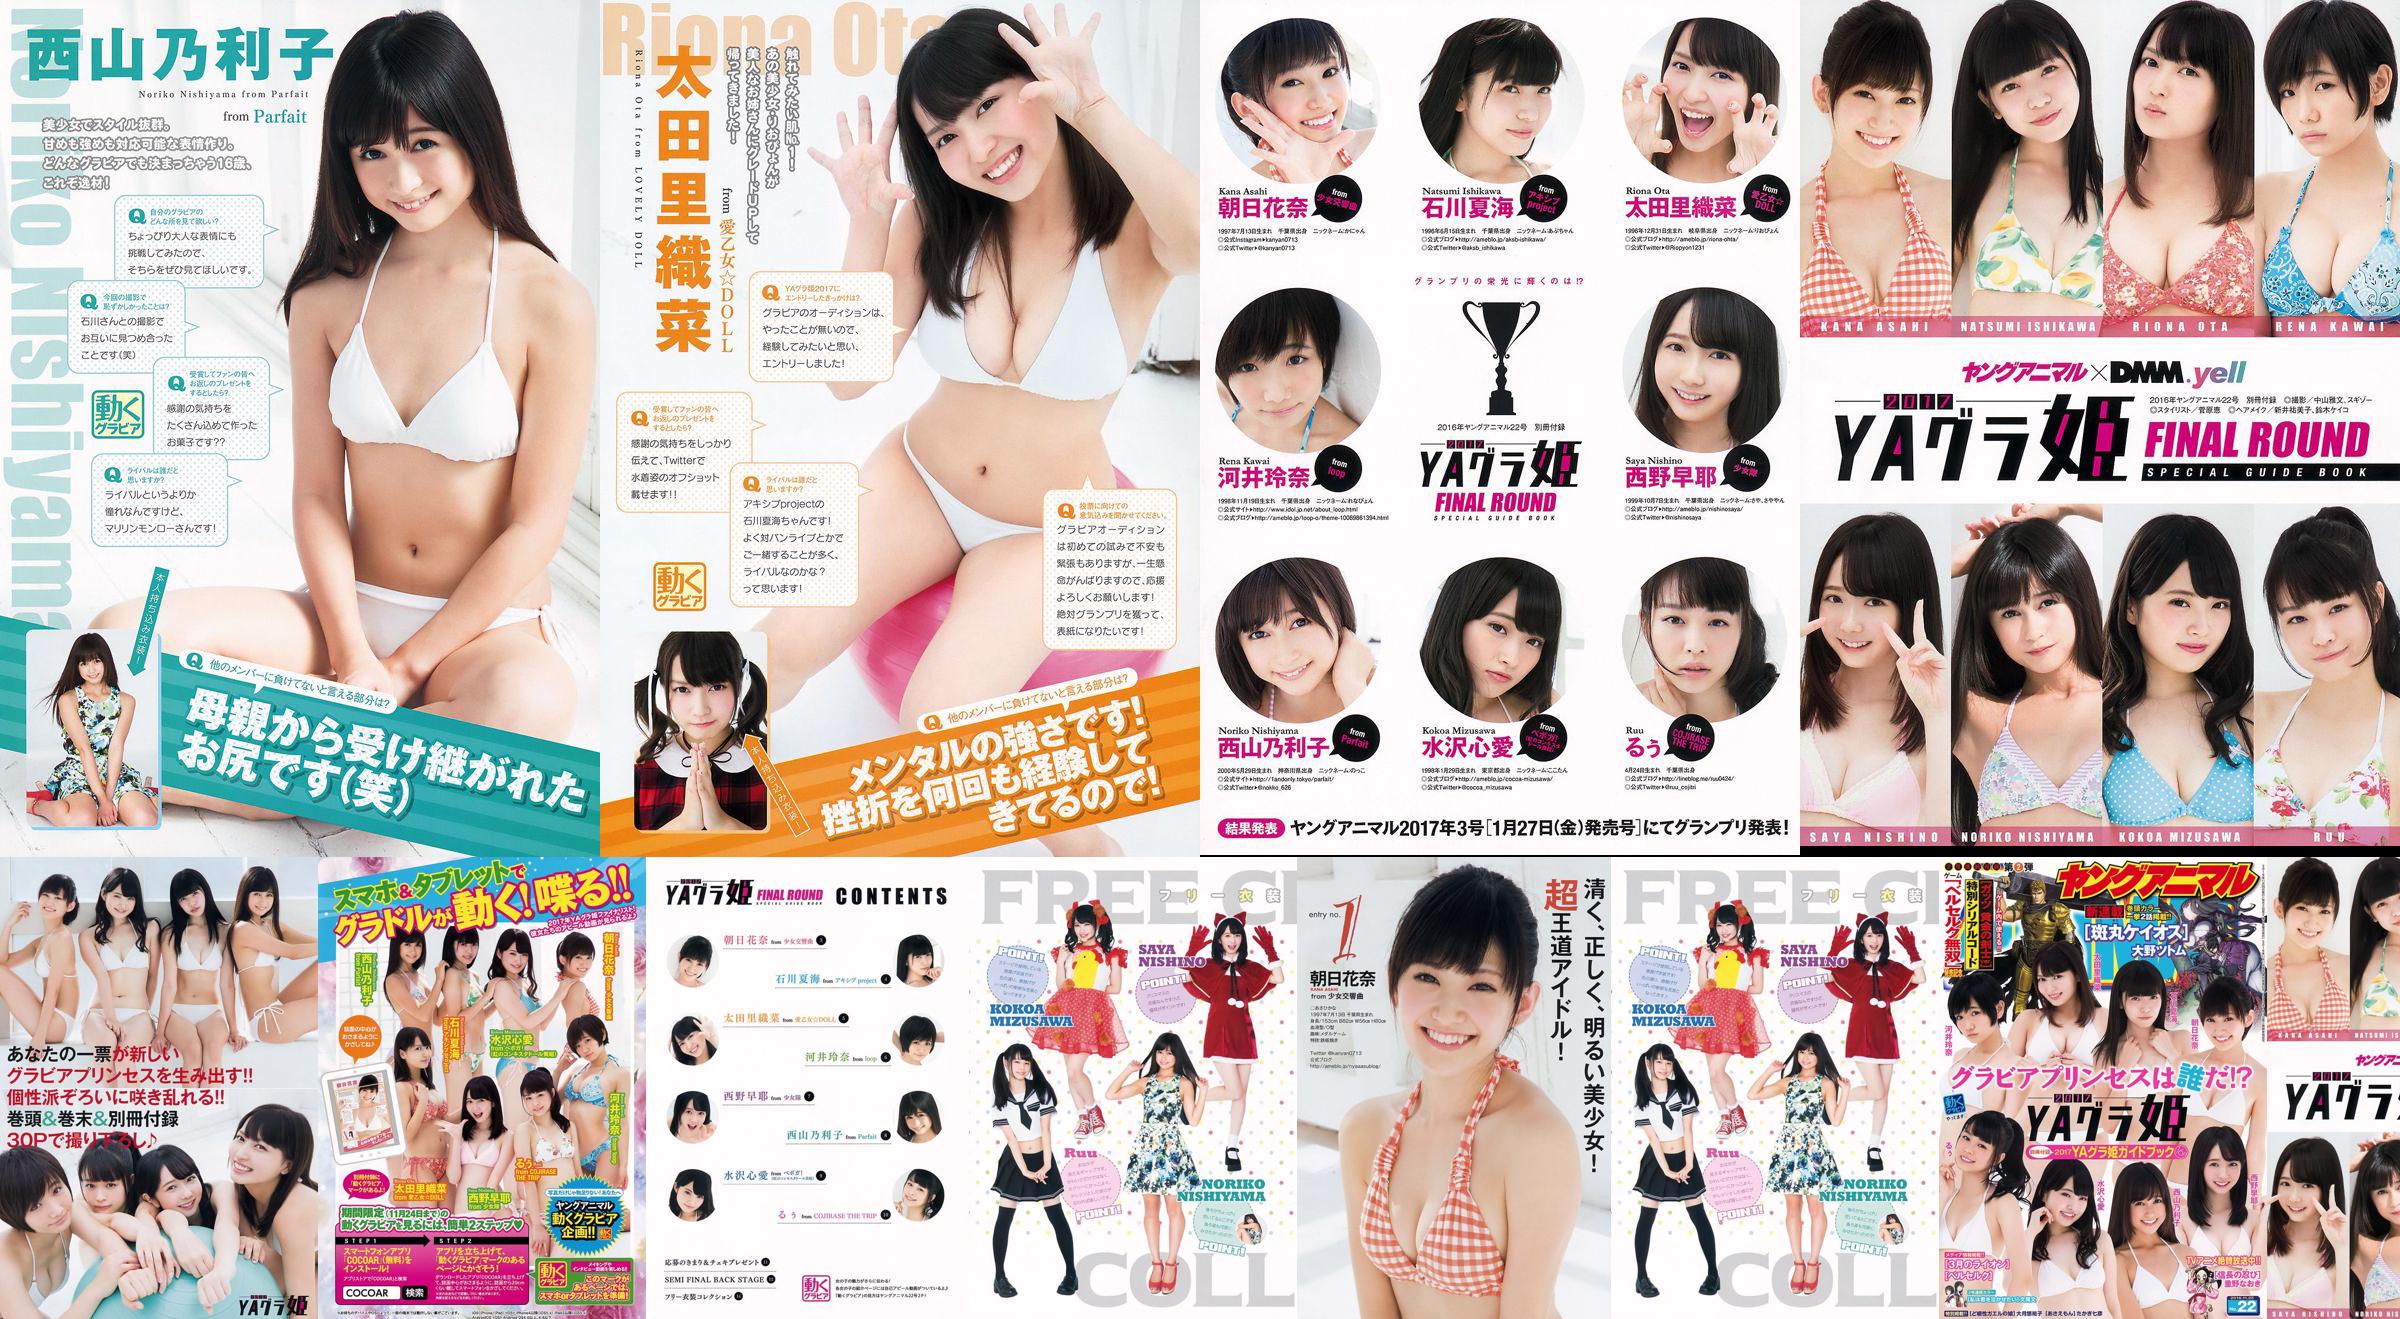 Mizusawa Beloved, Nishiyama Noriko, Nishino Haya, Kawai Reina, Ota Rina, Ishikawa Natsumi, Asahi Hana [น้องสัตว์] นิตยสารภาพถ่ายฉบับที่ 22 ประจำปี 2559 No.c04a3d หน้า 1